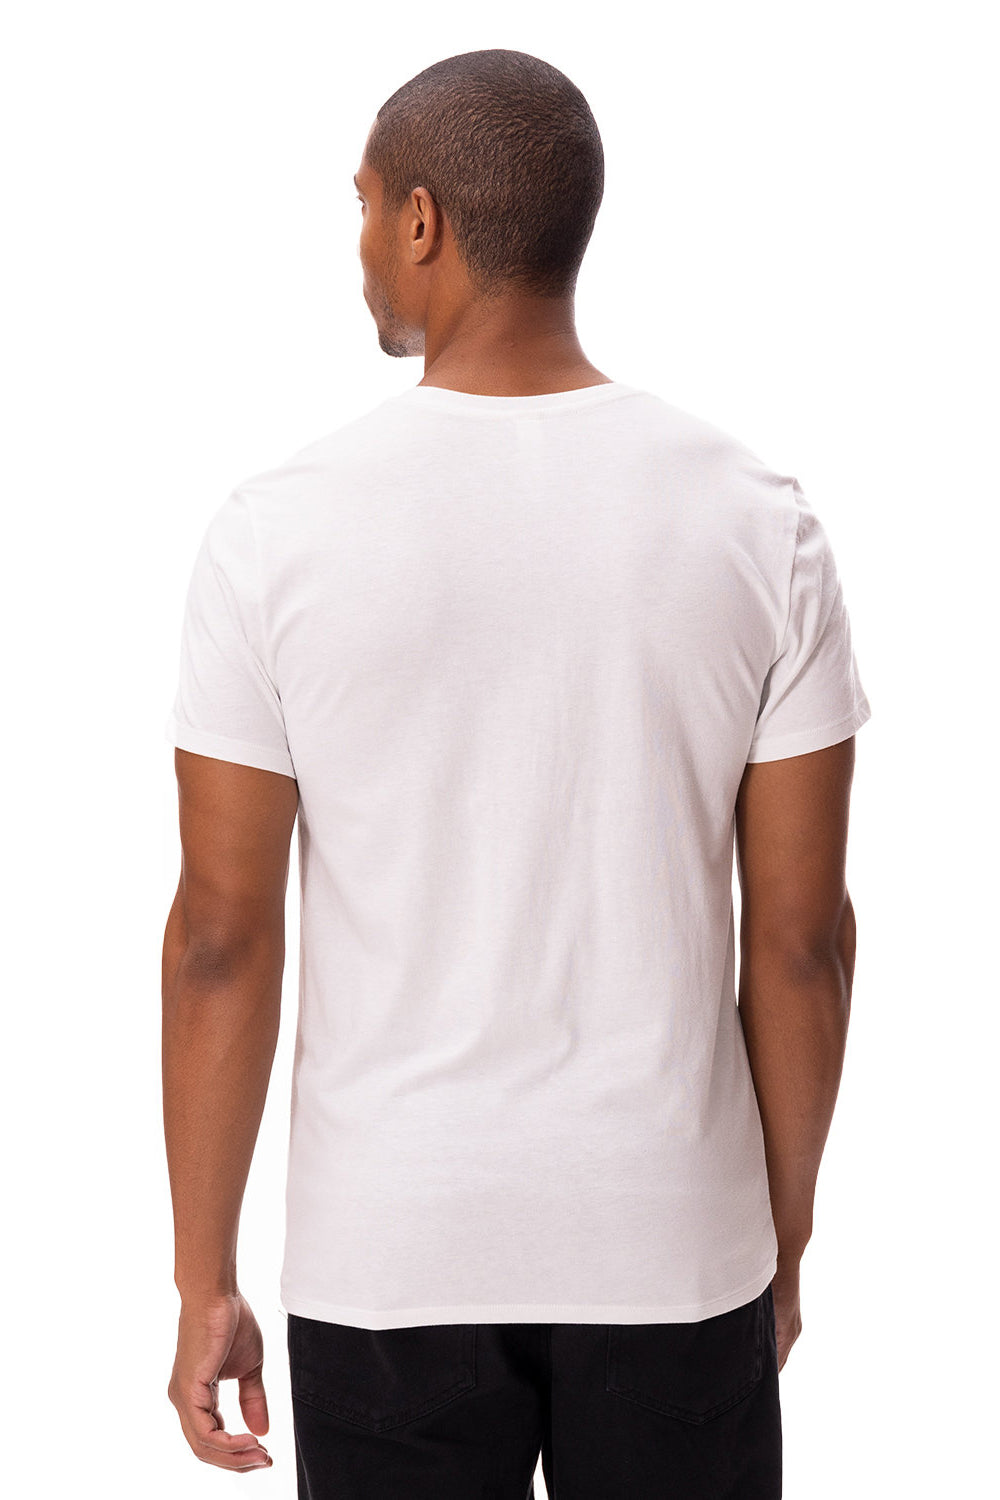 Threadfast Apparel 180A Mens Ultimate Short Sleeve Crewneck T-Shirt White Back